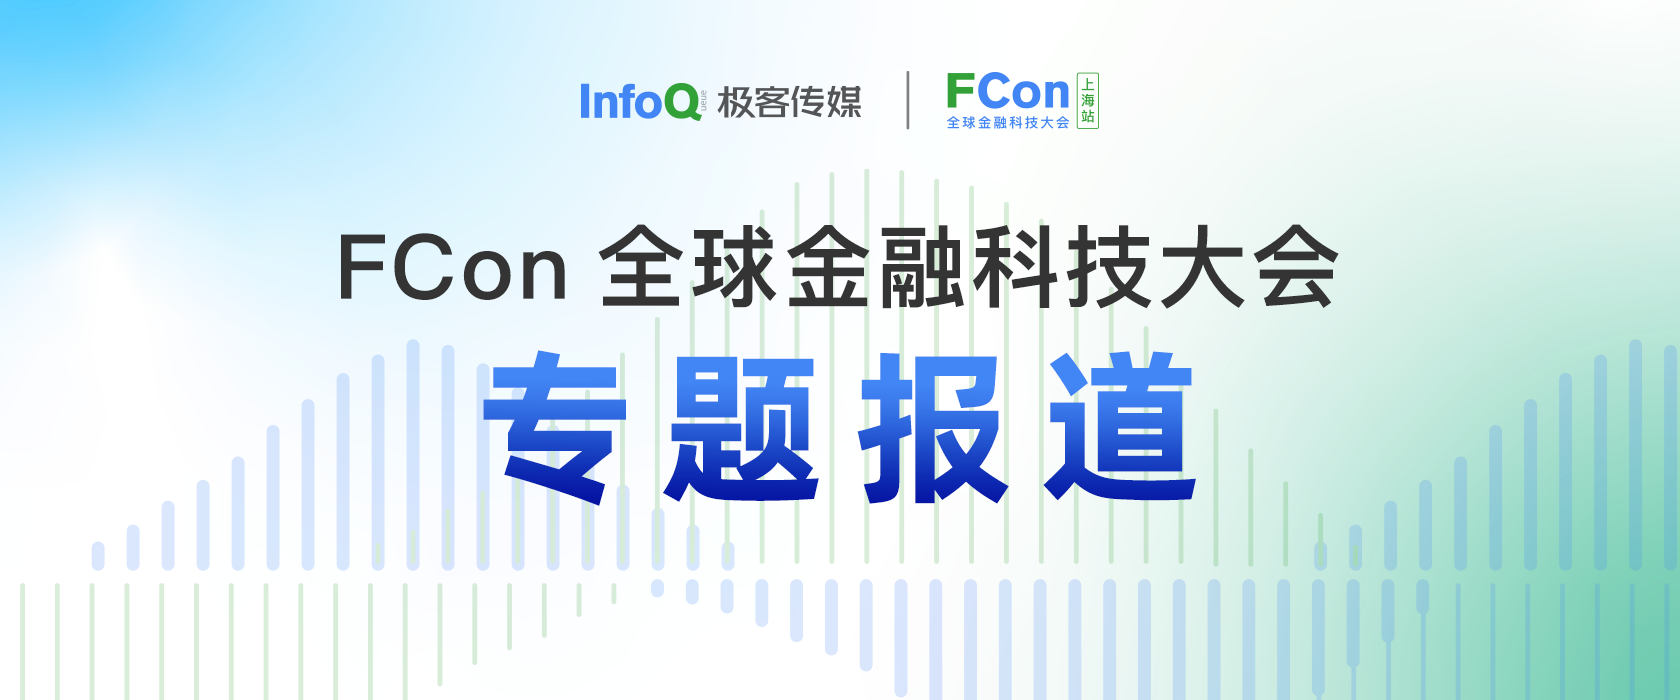 FCon全球金融科技大会专题报道